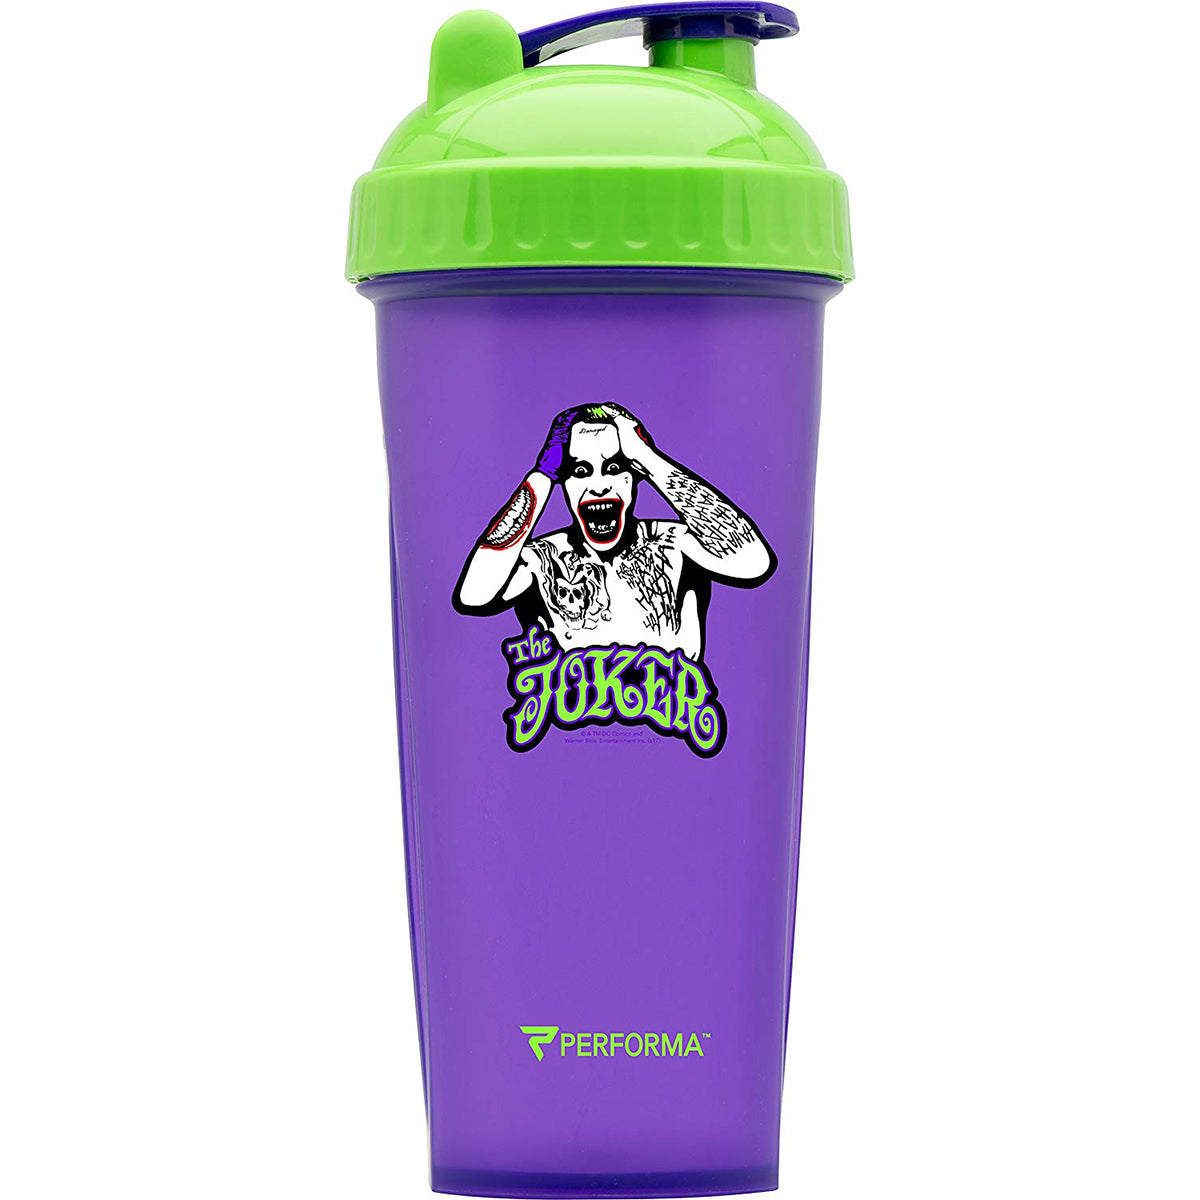 Performa PerfectShaker 28 oz. Villain Shaker Cup Bottle - The Joker - Purple PerfectShaker